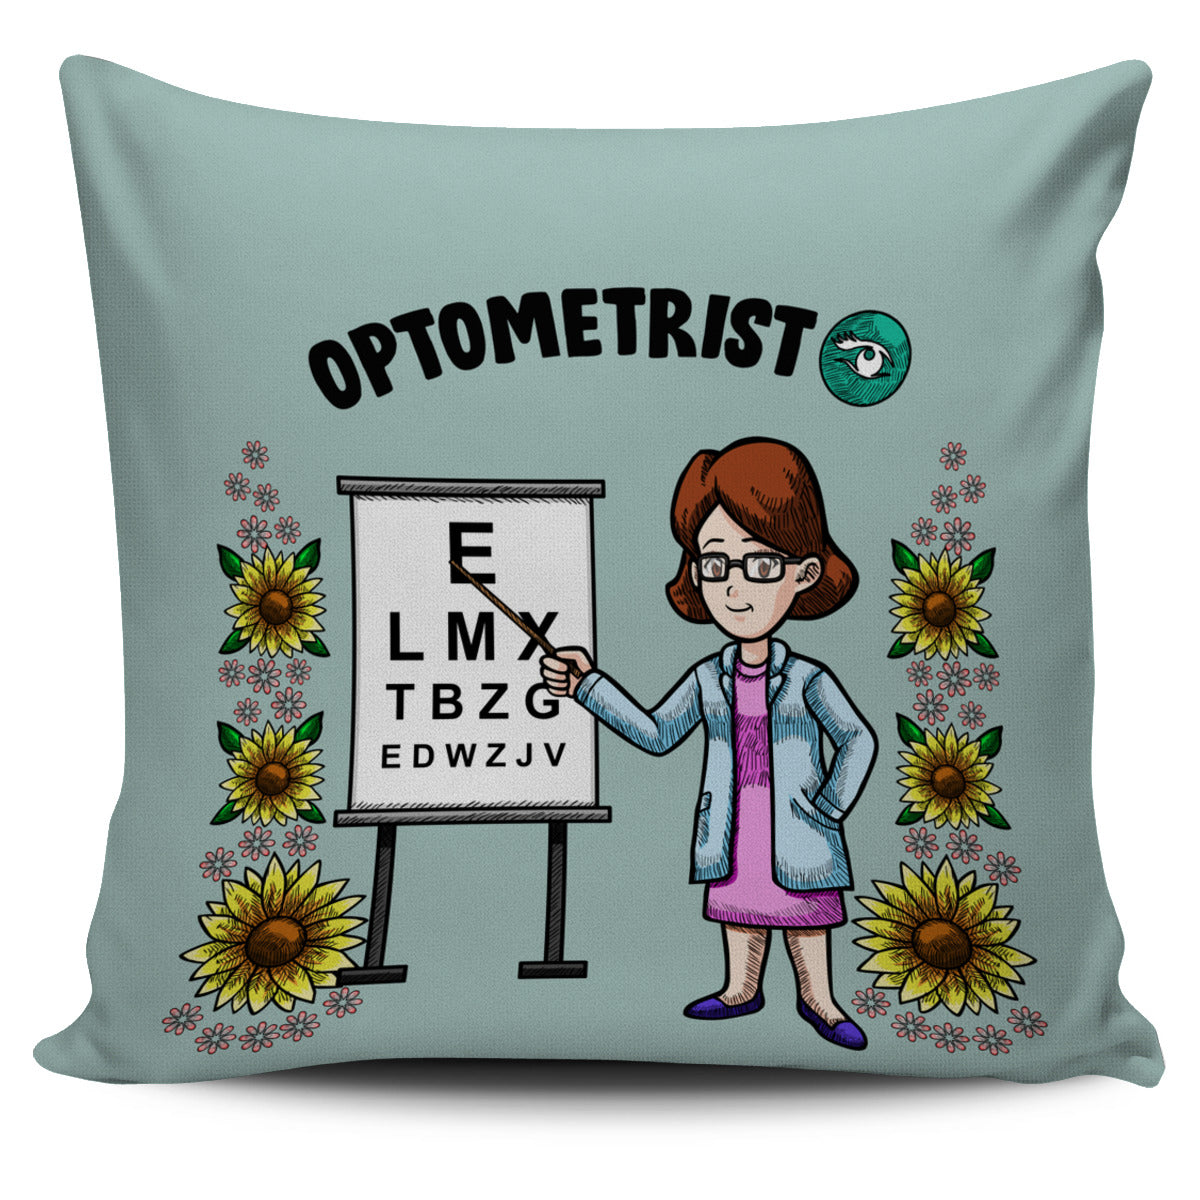 Optometrist Pillow Cover